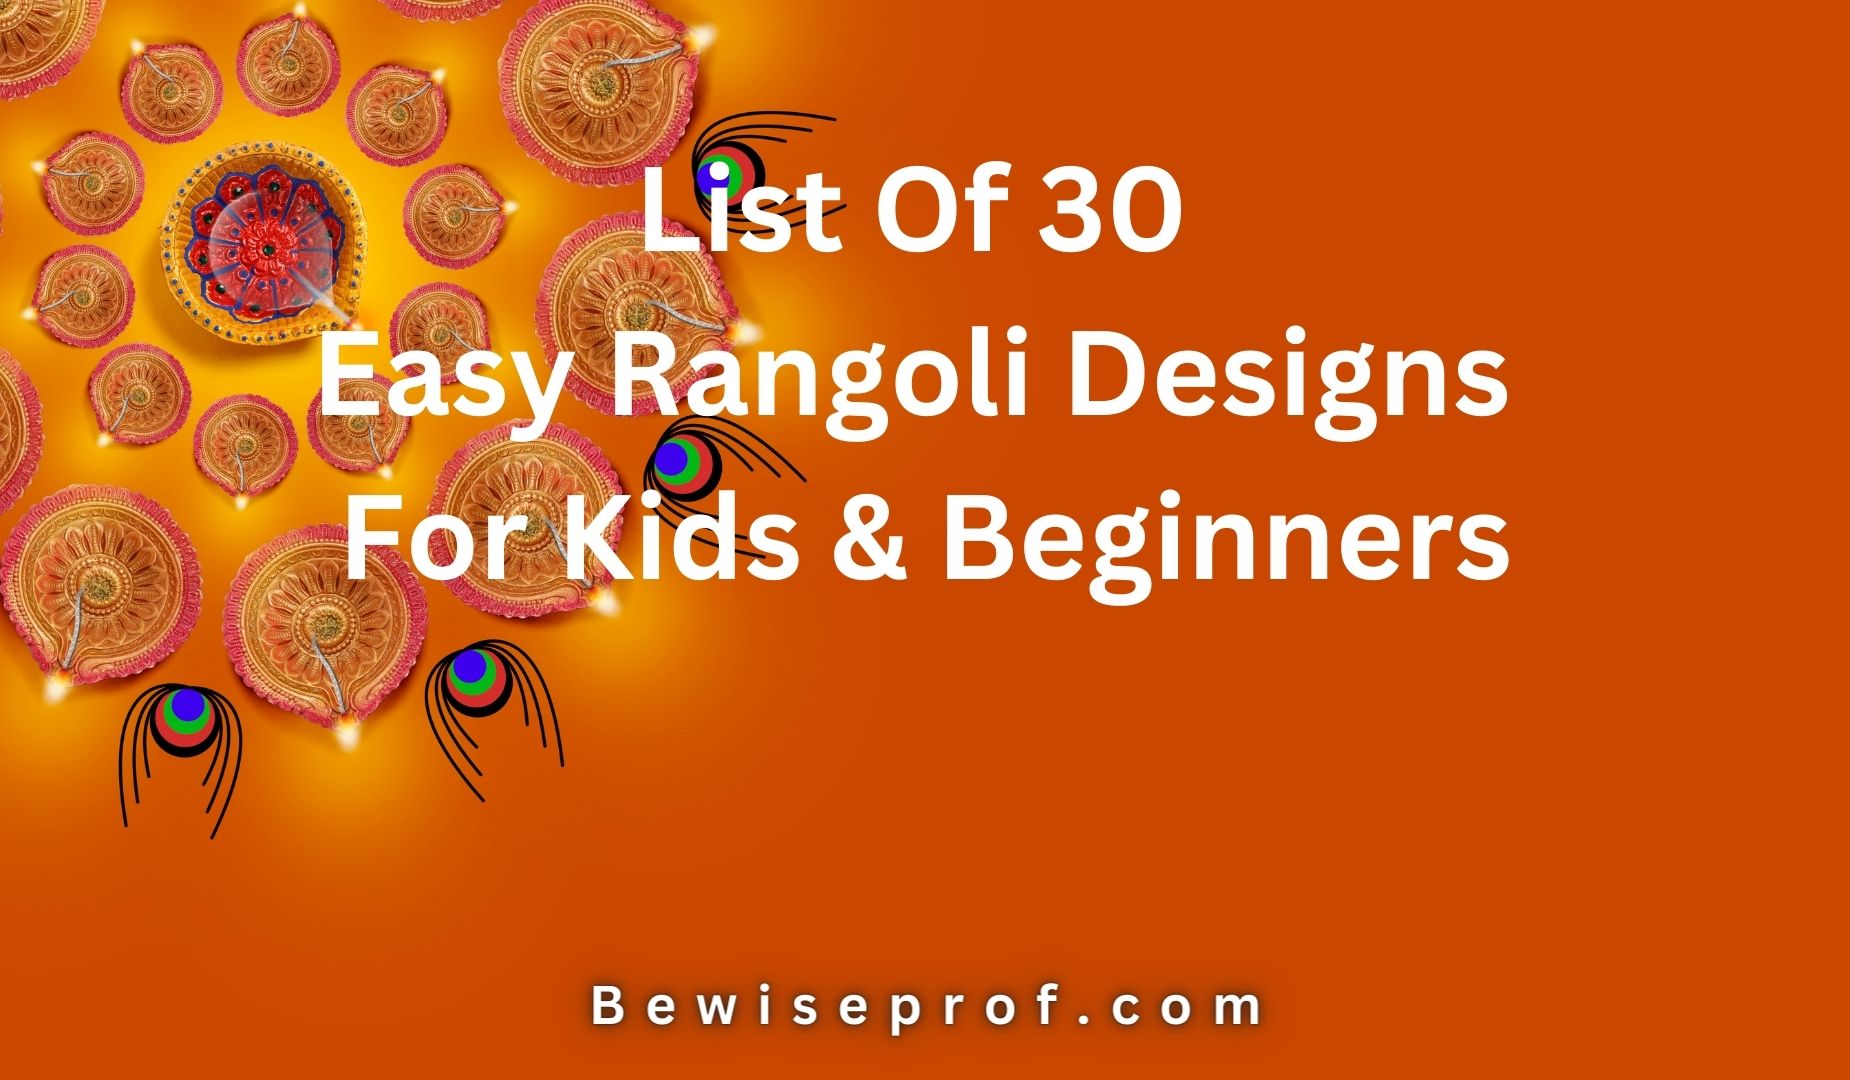 List Of 30 Easy Rangoli Designs For Kids And Beginners